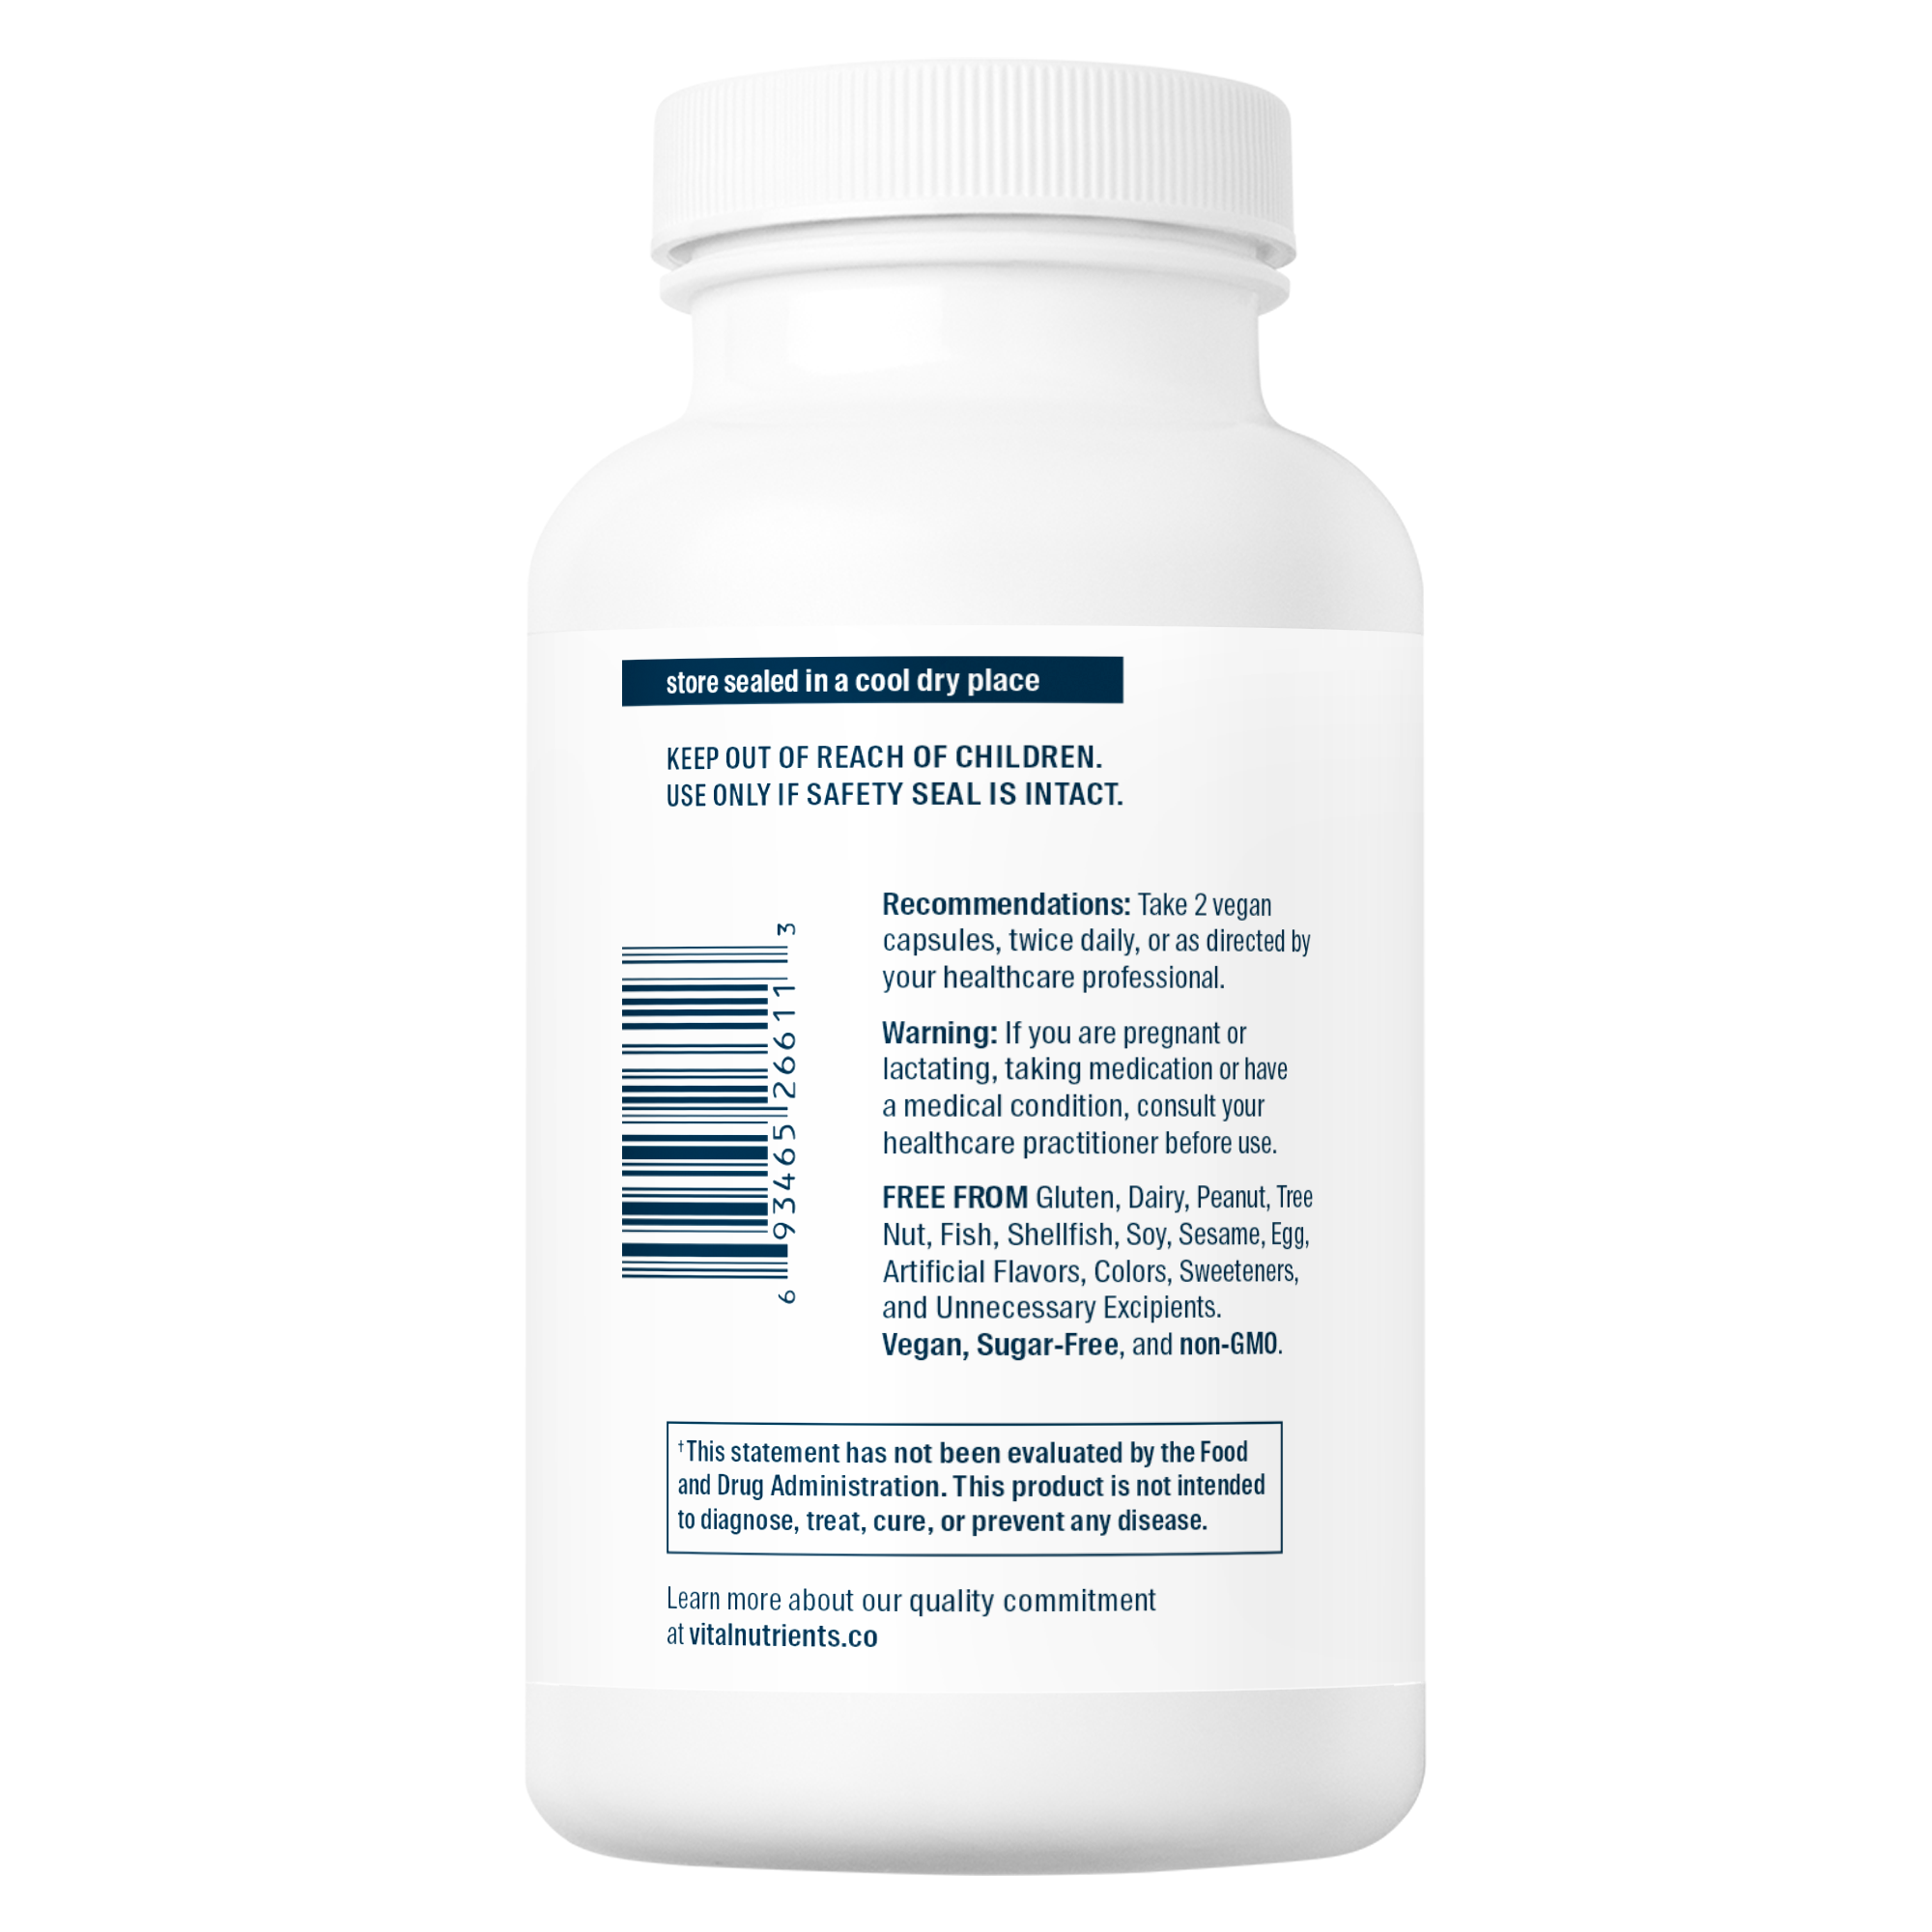 Hormone Balance - 120 Capsules | Vital Nutrients